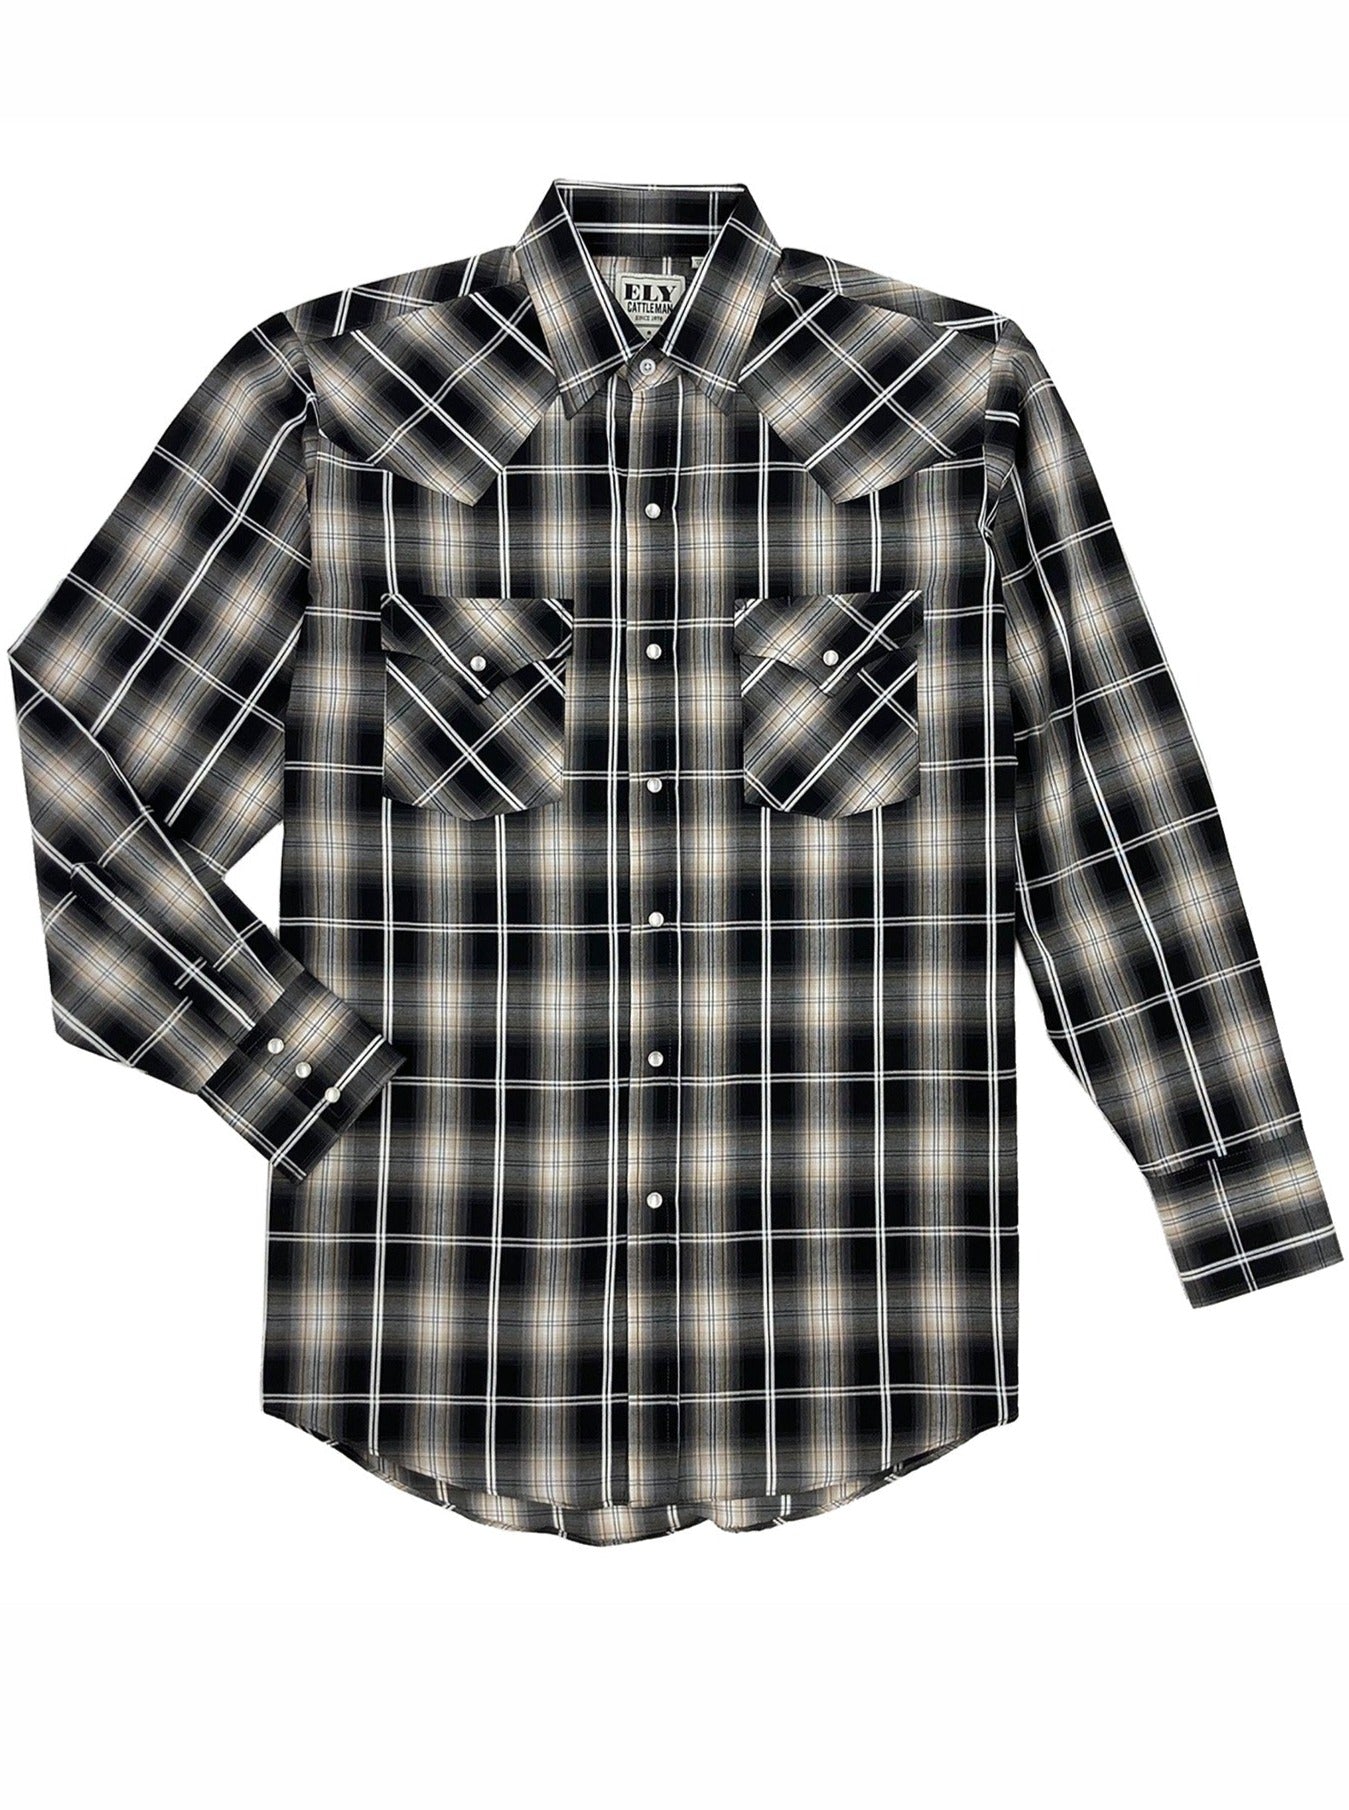 Men's Ely Cattleman Long Sleeve Textured Plaid Western Snap Shirt - Black